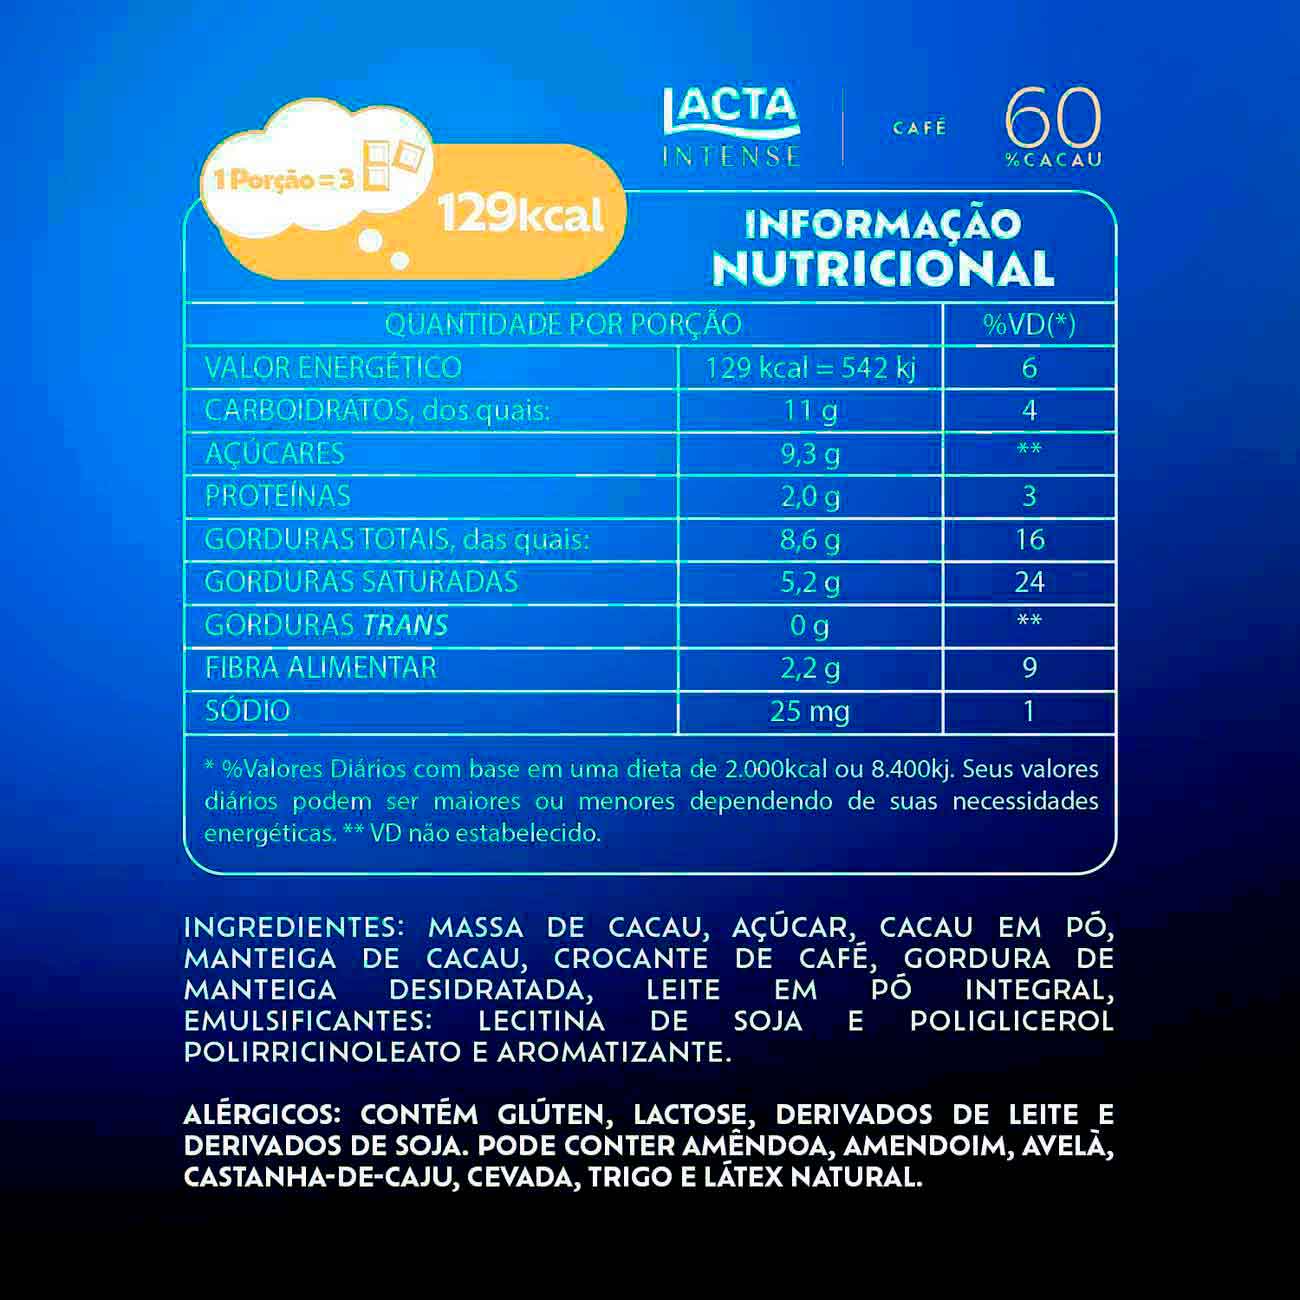 Barra de Chocolate Lacta Intense 60% Cacau Caf 85g | Display 17 unidades